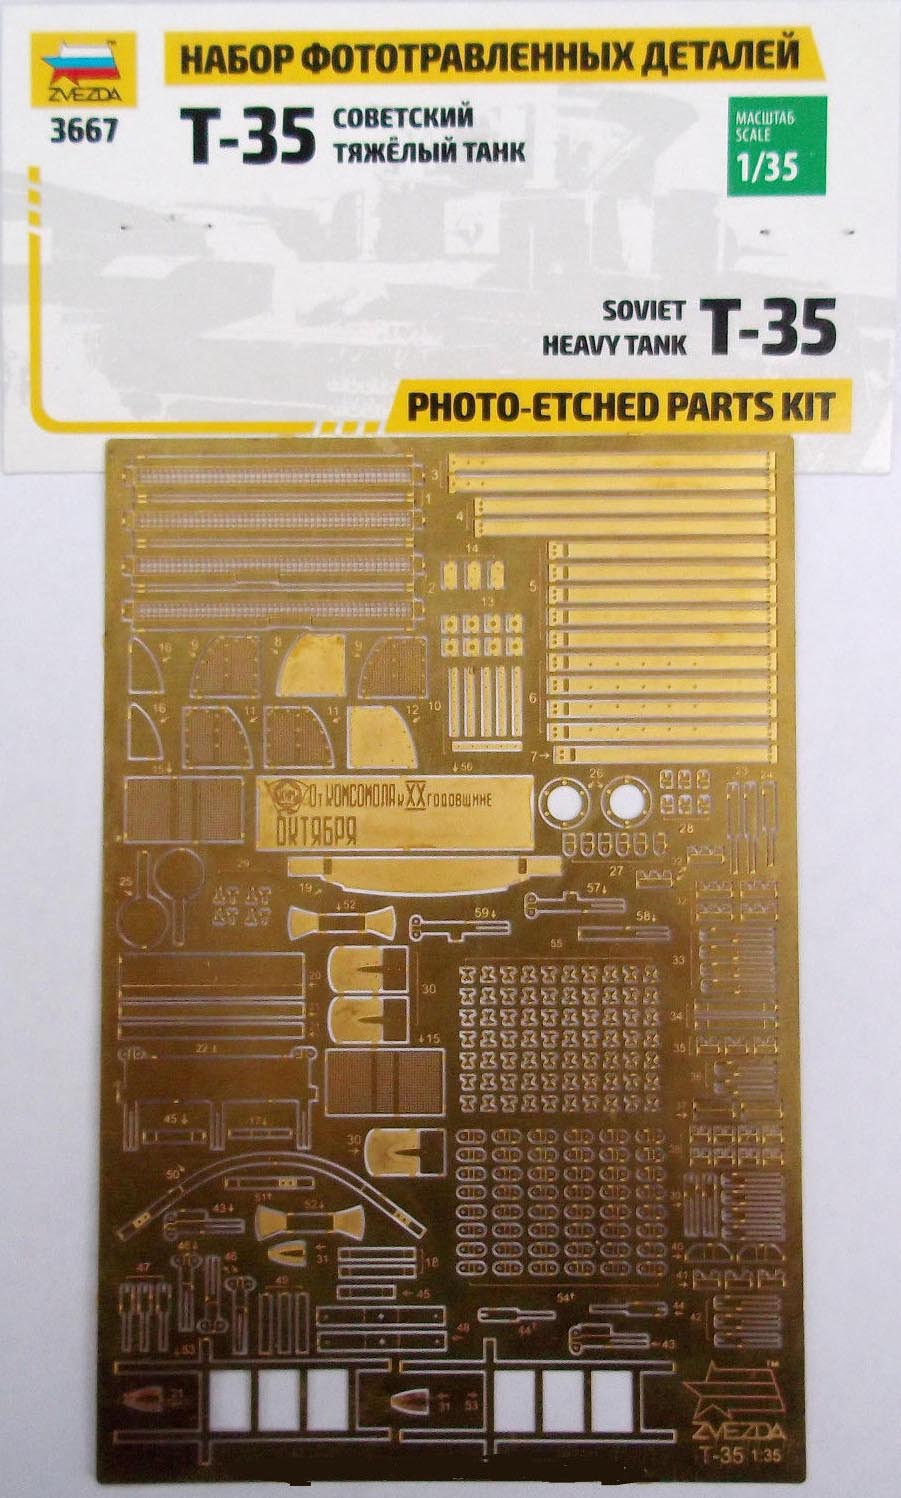 1123 T-35 Photo-Etched Parts kit Image